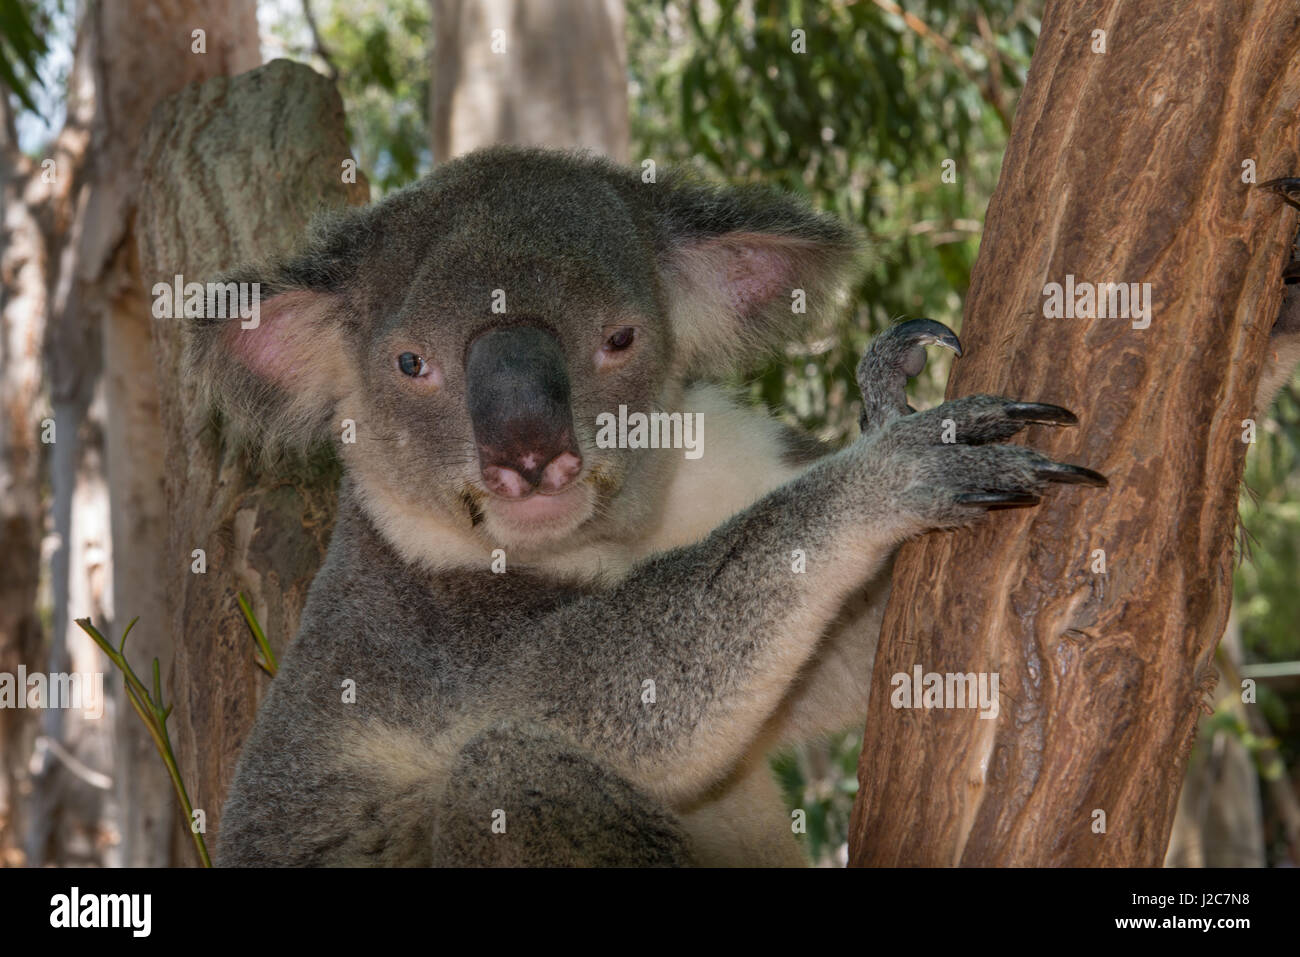 Australia, Queensland, Townsville. Billabong Sanctuary, 25-acre Stock Photo  - Alamy